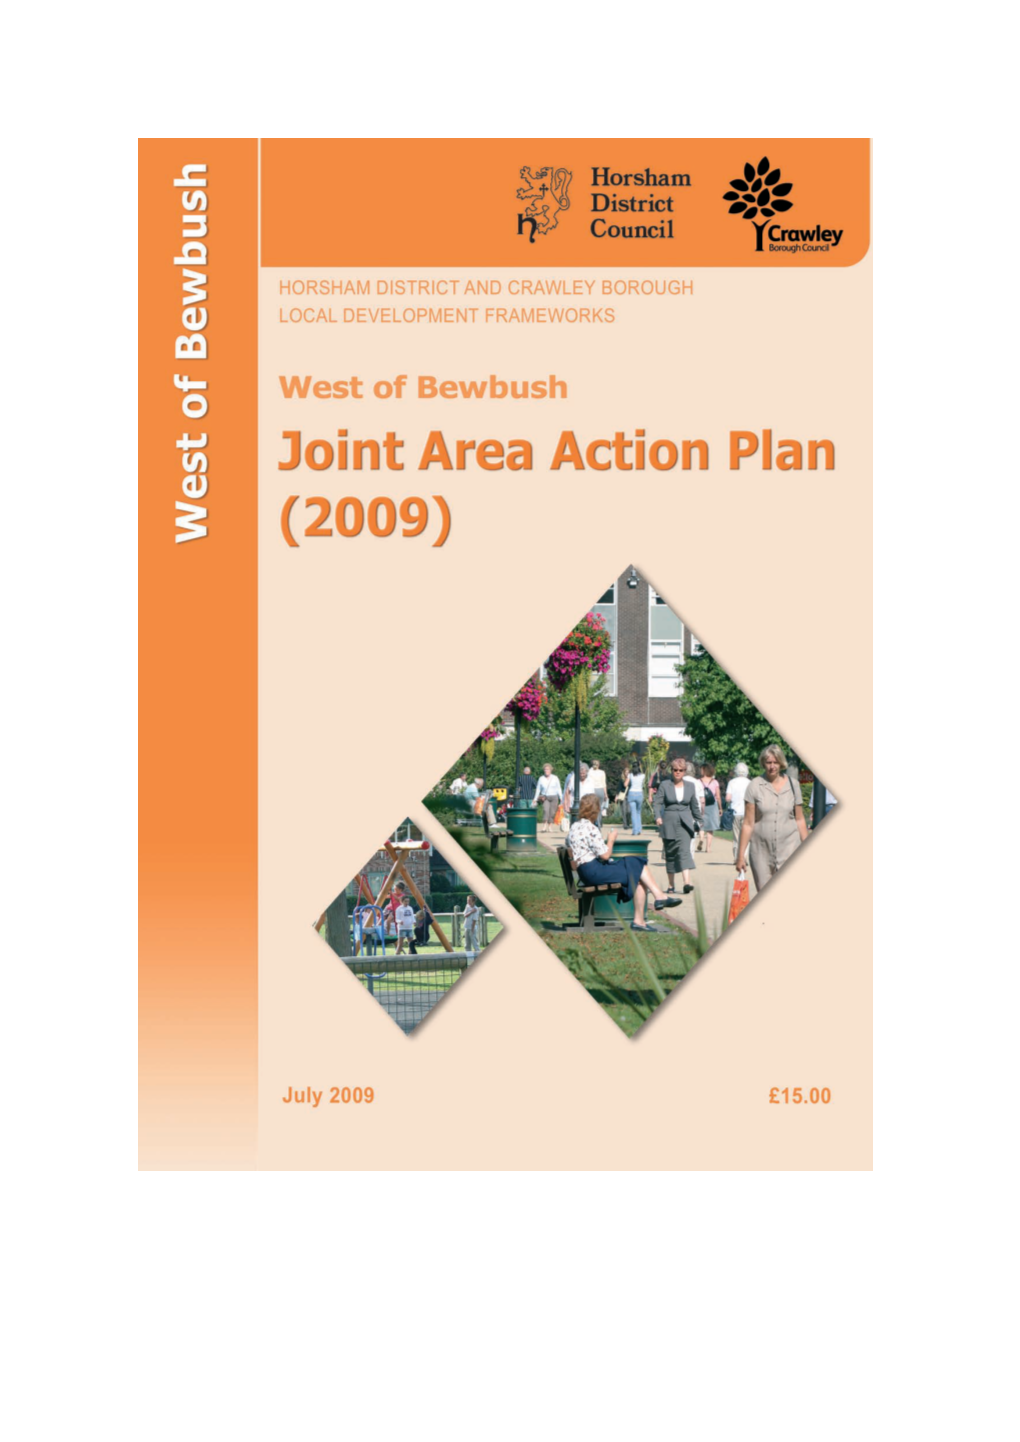 West of Bewbush Joint Area Action Plan (2009)